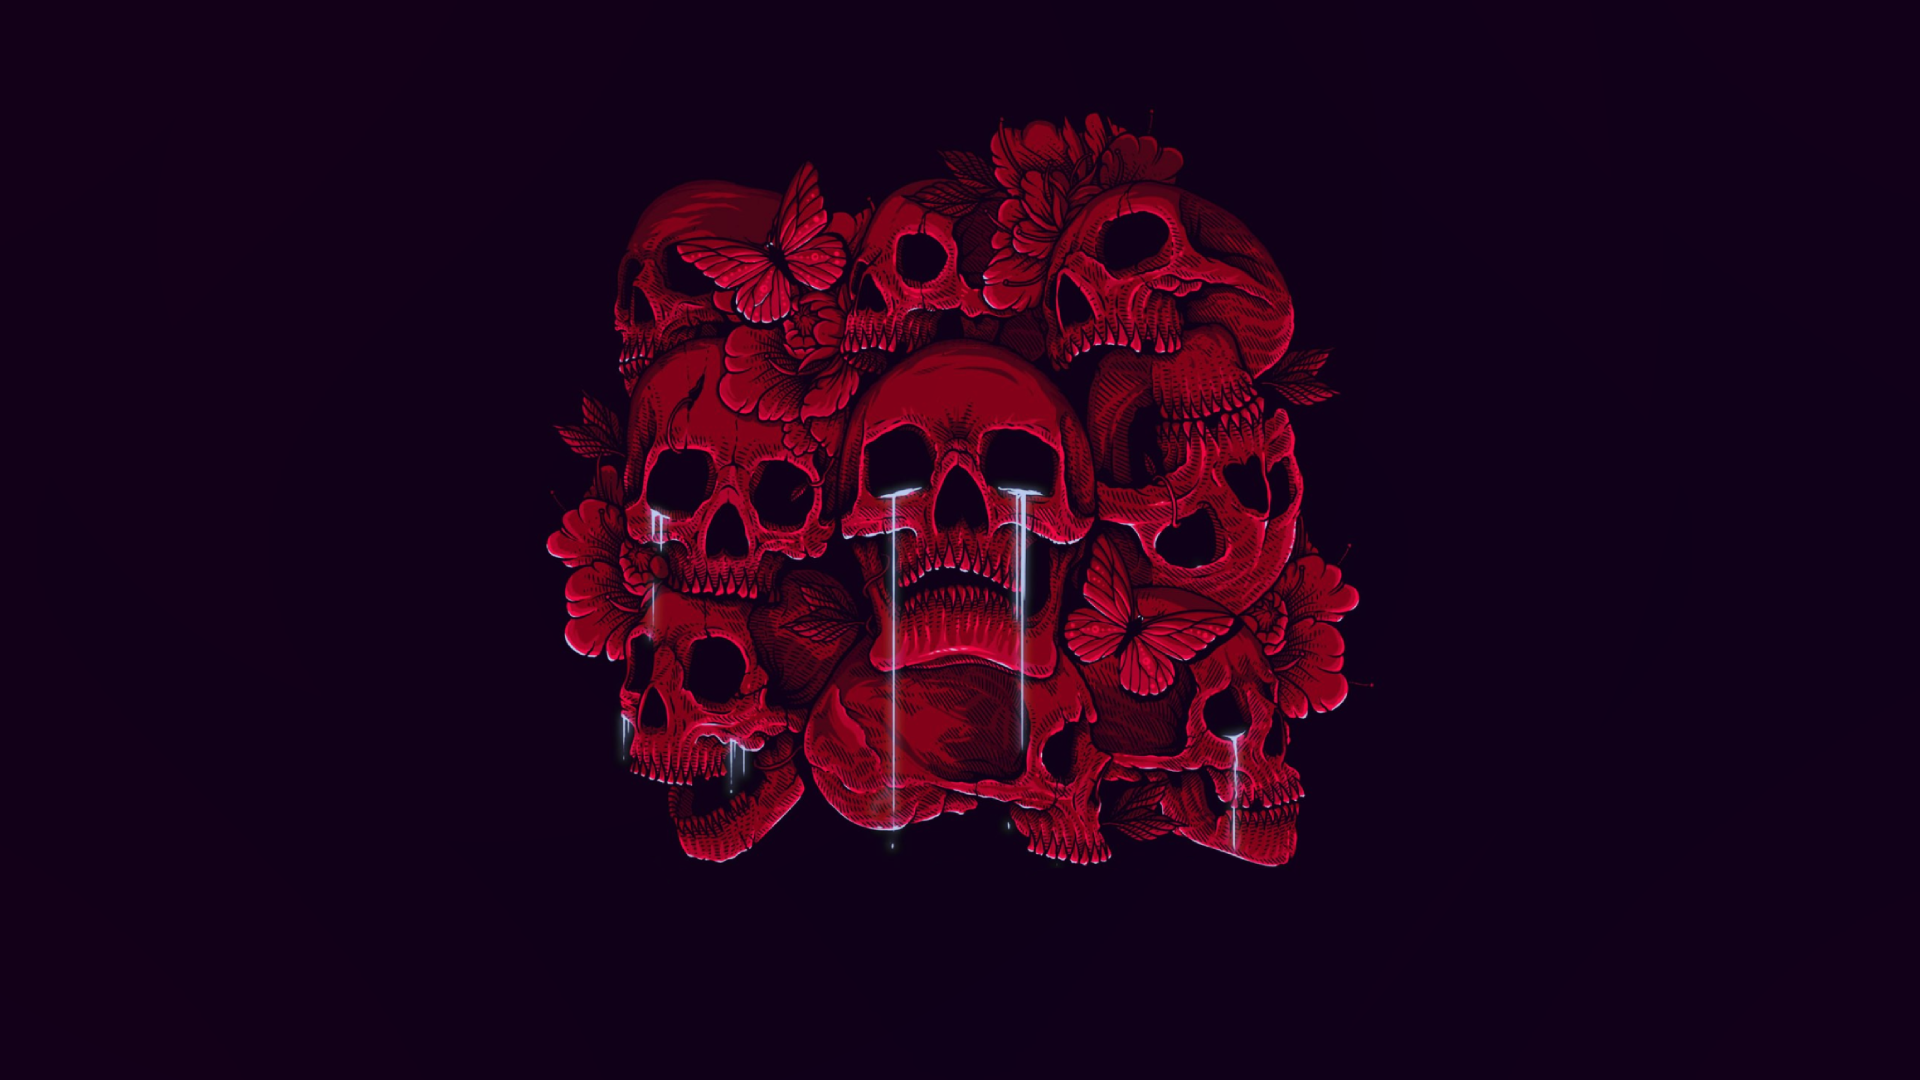 General 1920x1080 minimalism skull simple background Kai Wachi red background crying